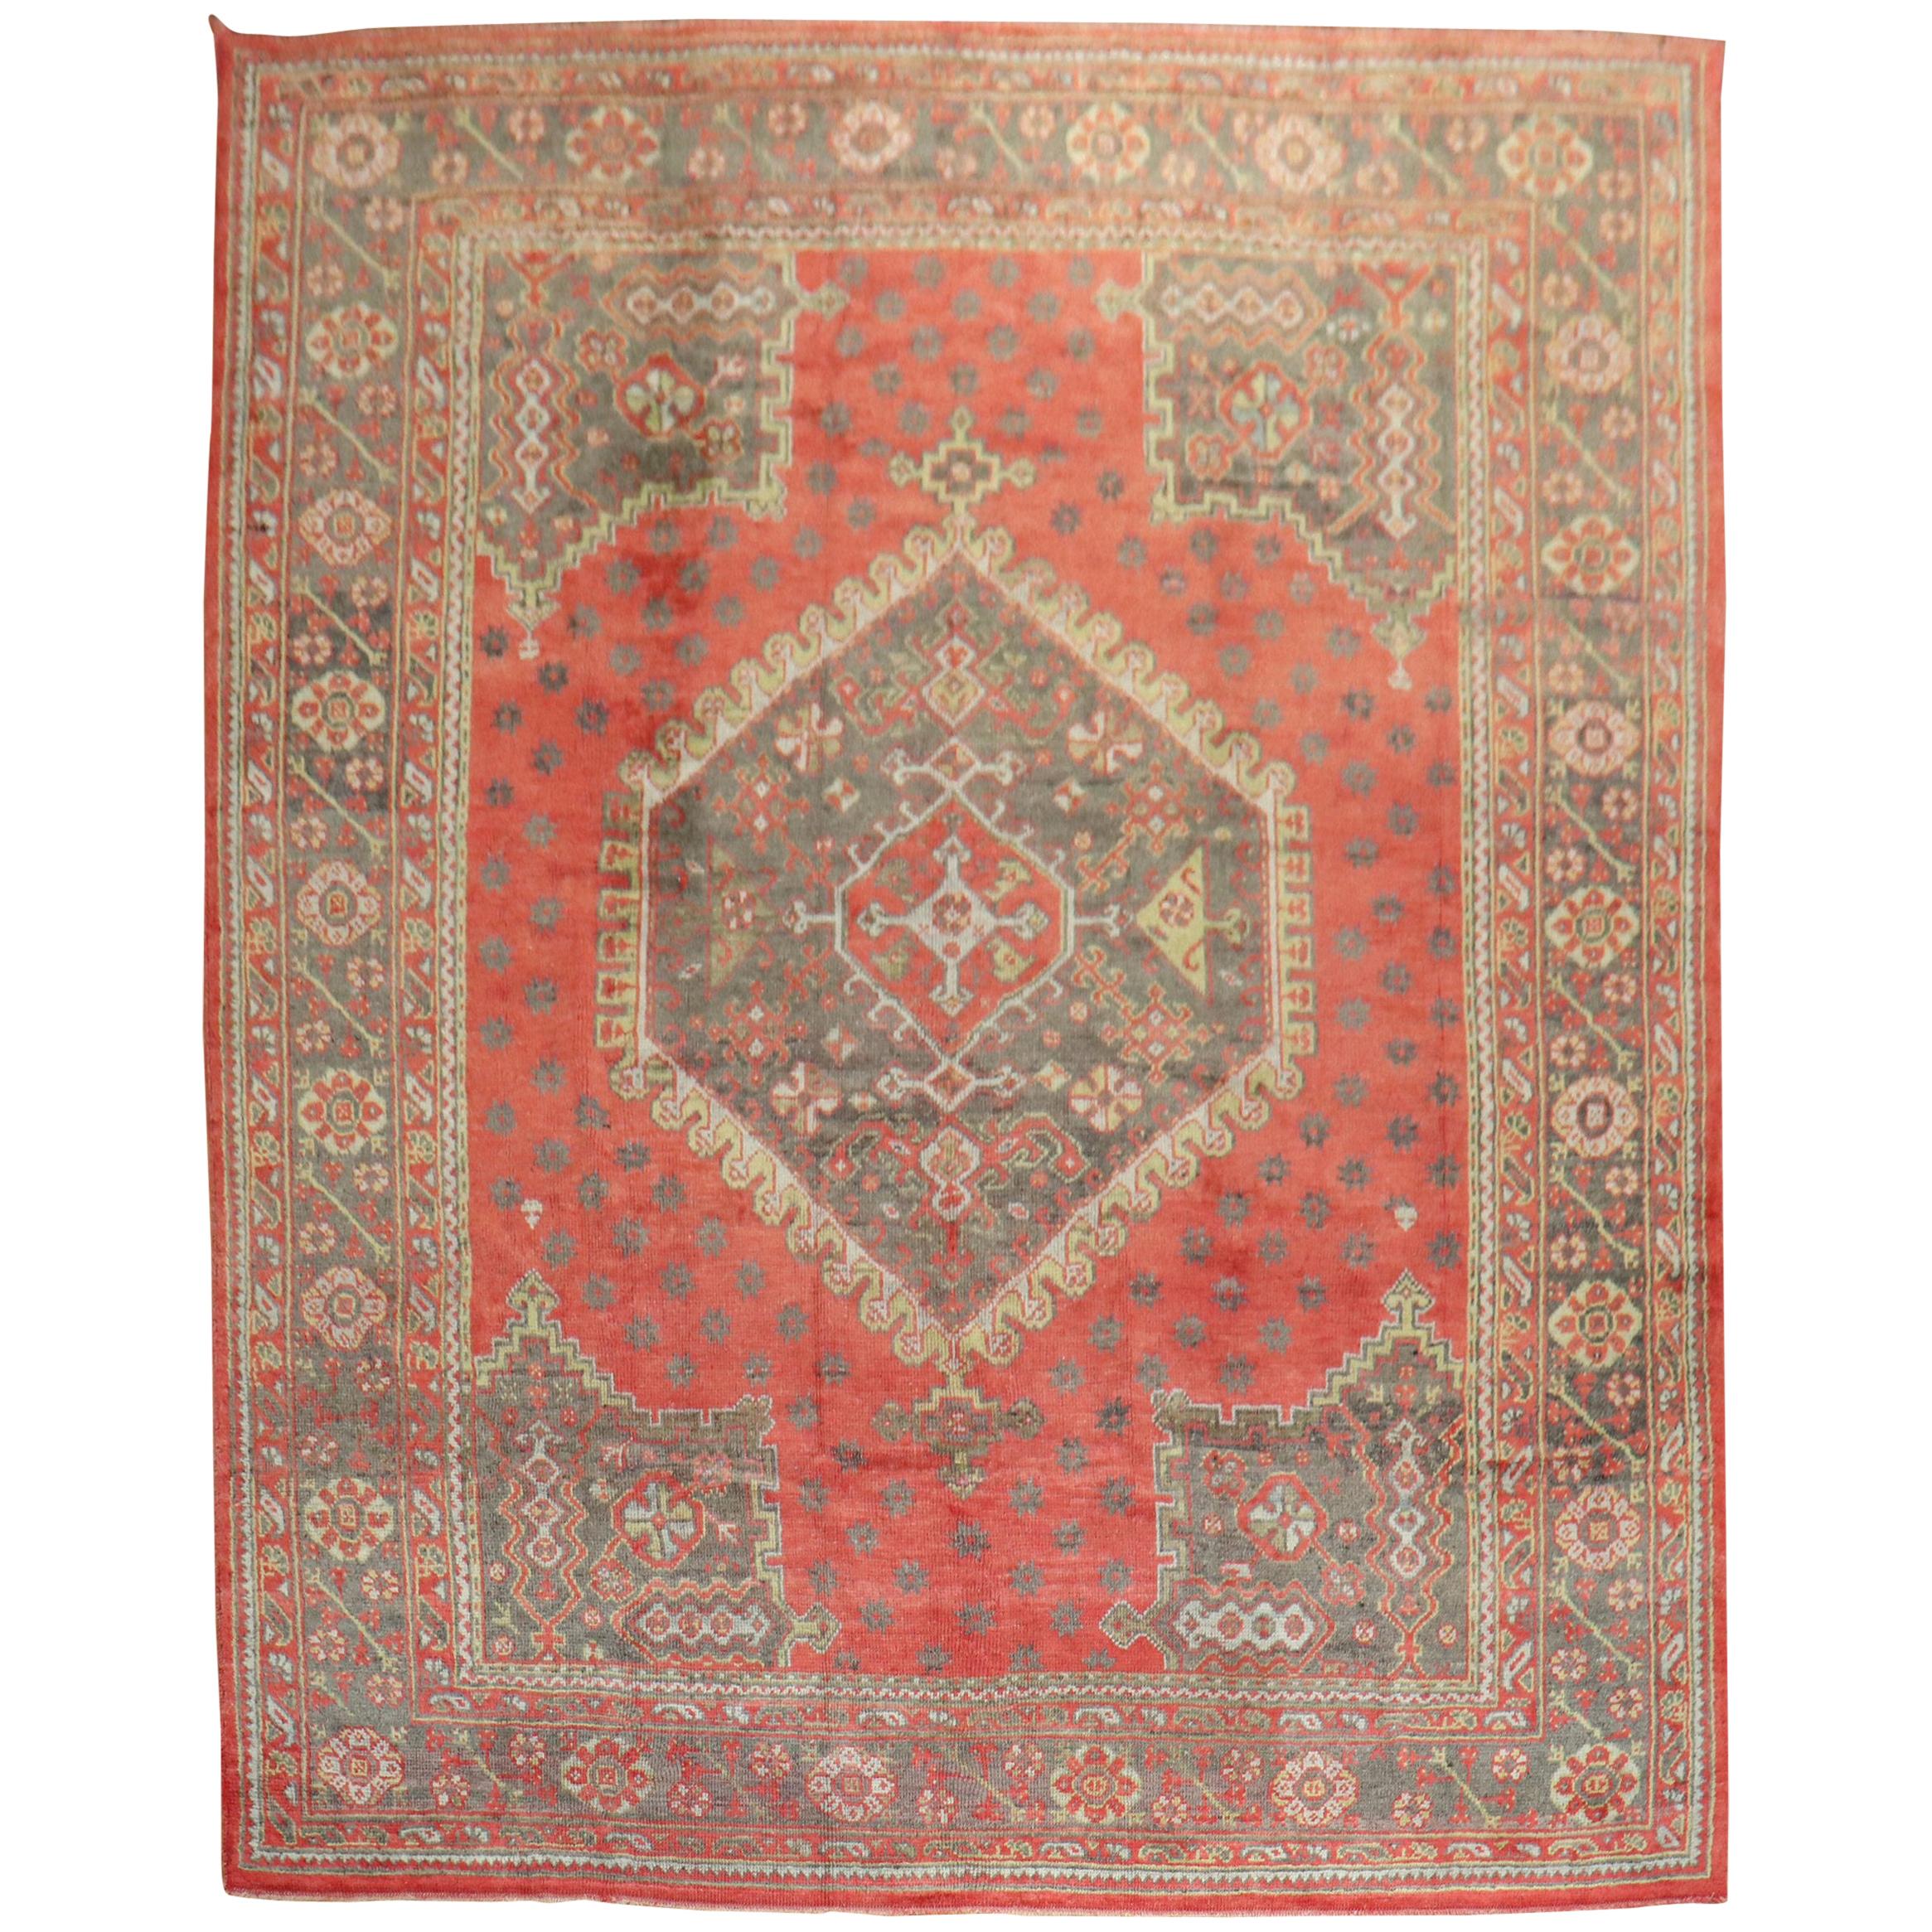 Traditional Antique Turkish Oushak Carpet, 20th Century